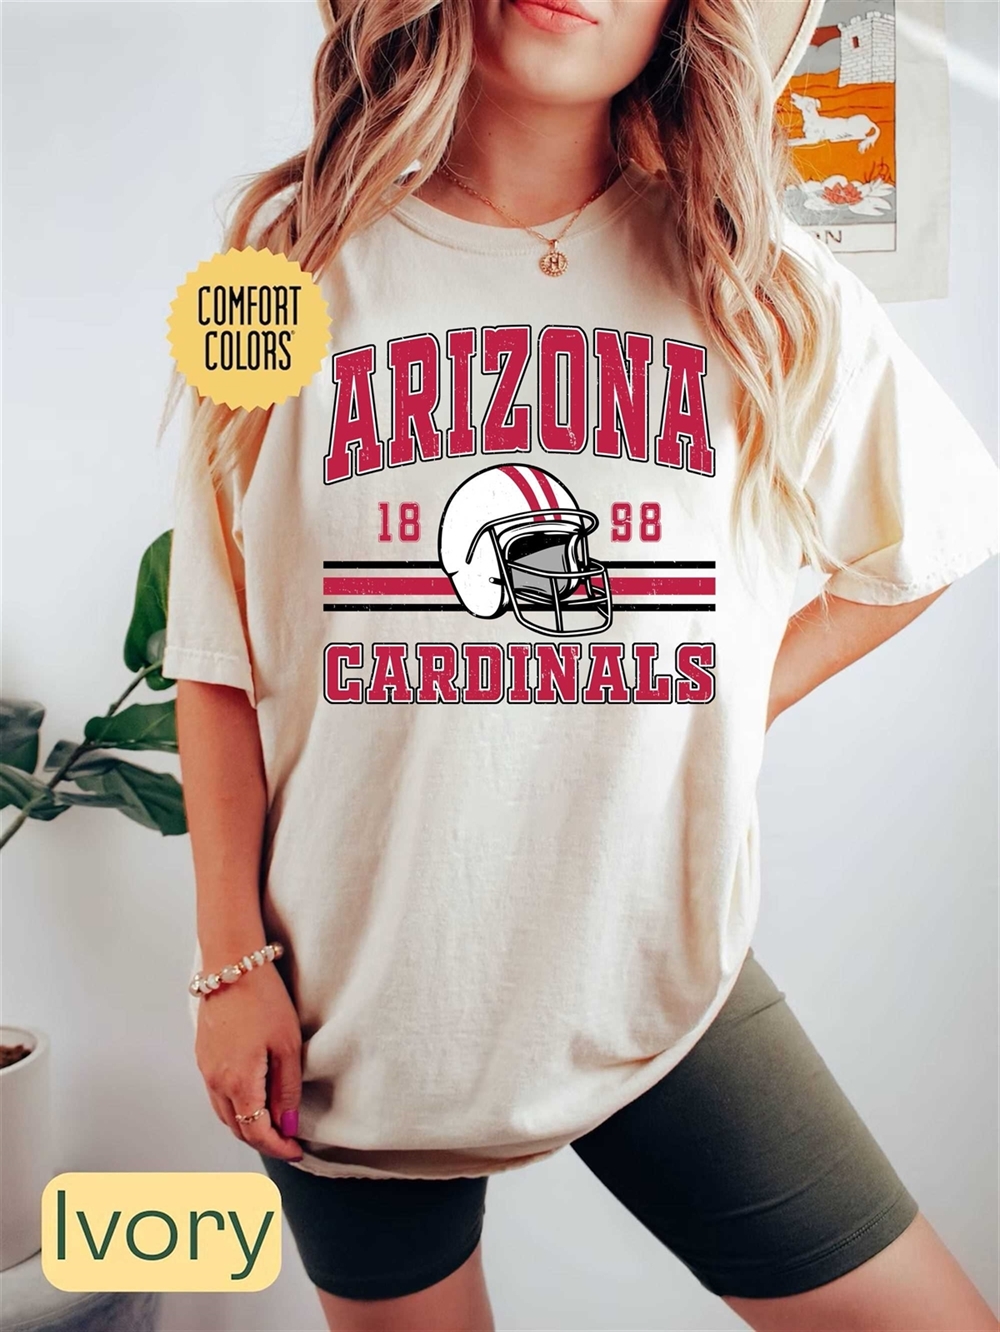 Arizona Football Comfort Colors Shirt Trendy Vintage Retro 80s Style Football Tshirt